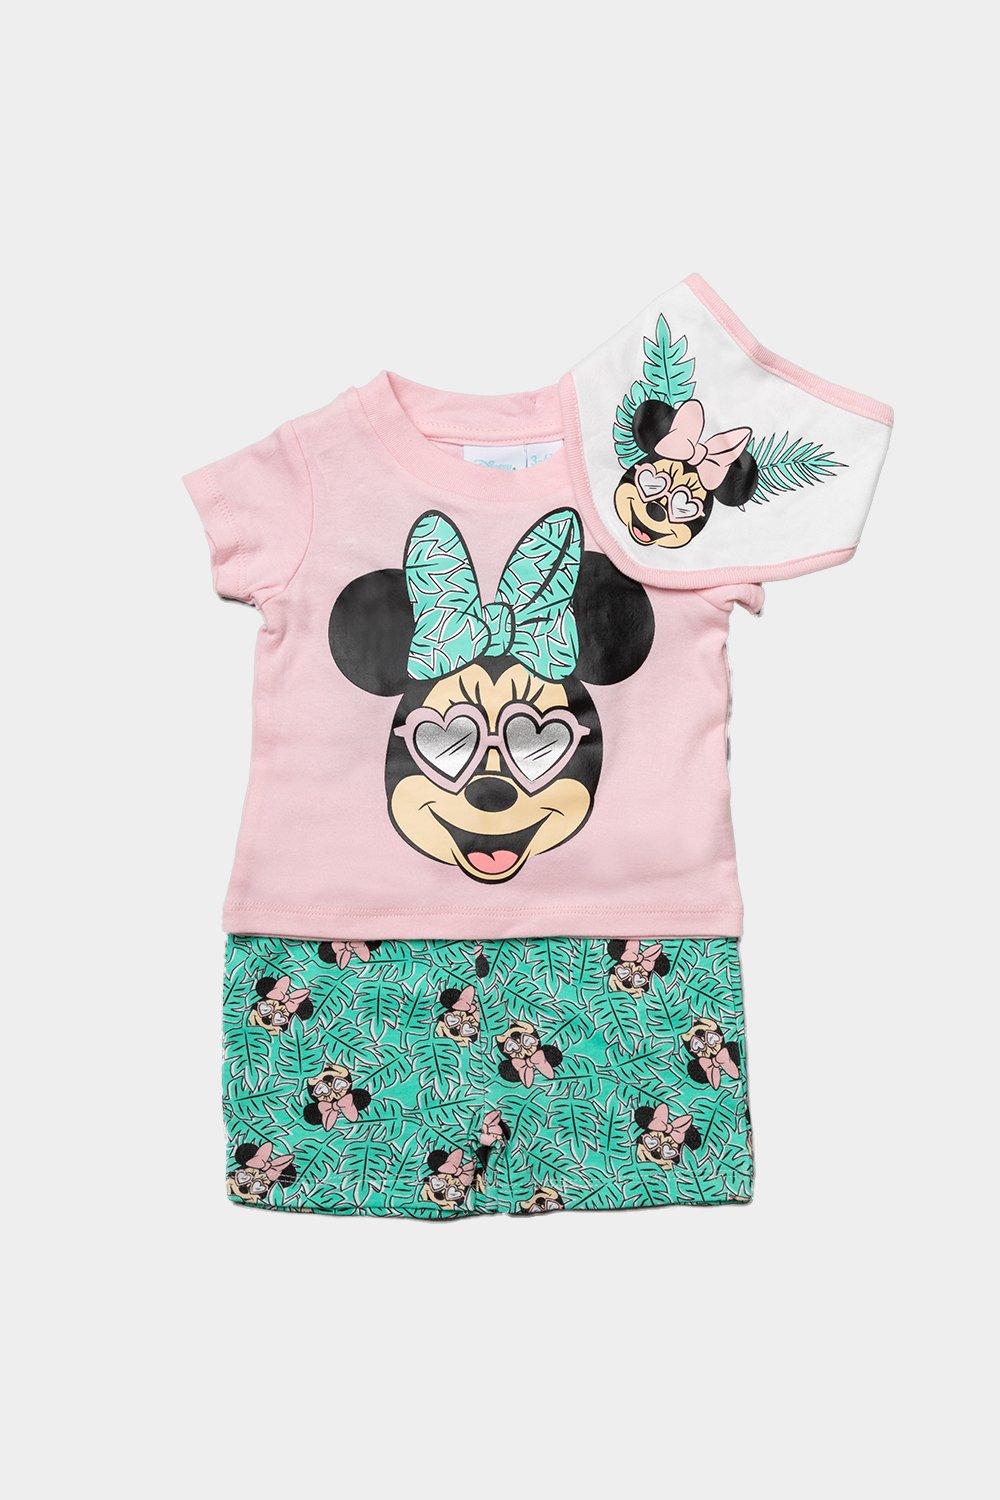 Тропический костюм из трех предметов Минни Маус Disney Baby, розовый набор носков minnie mouse минни маус 5 пар 20 22 см